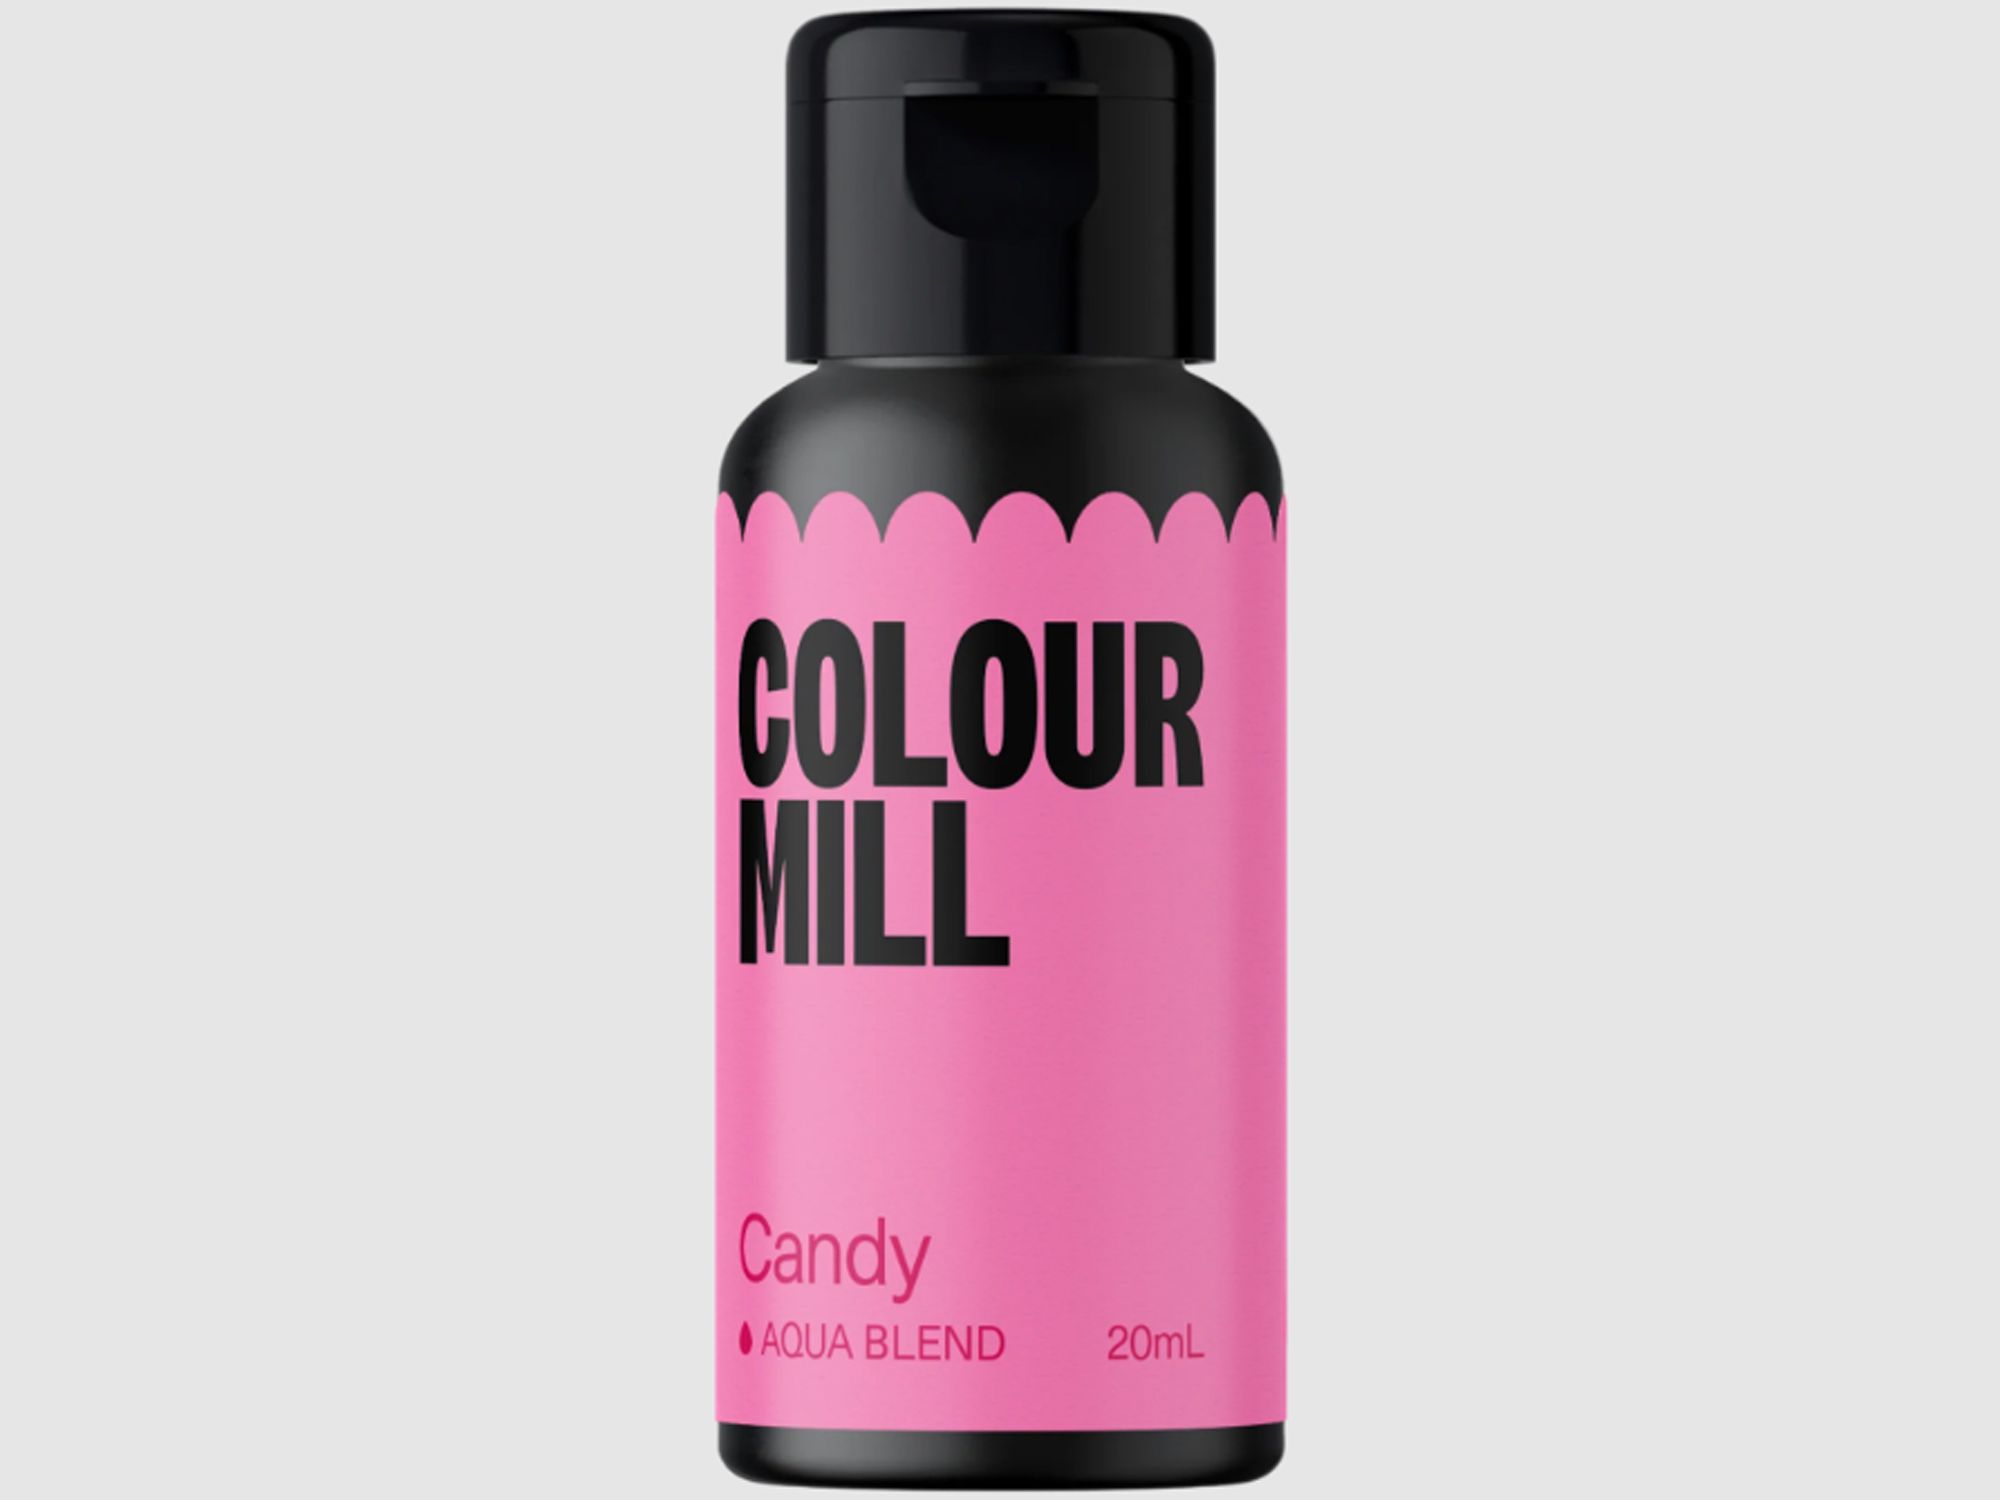 Colour Mill Candy (Aqua Blend) 20ml